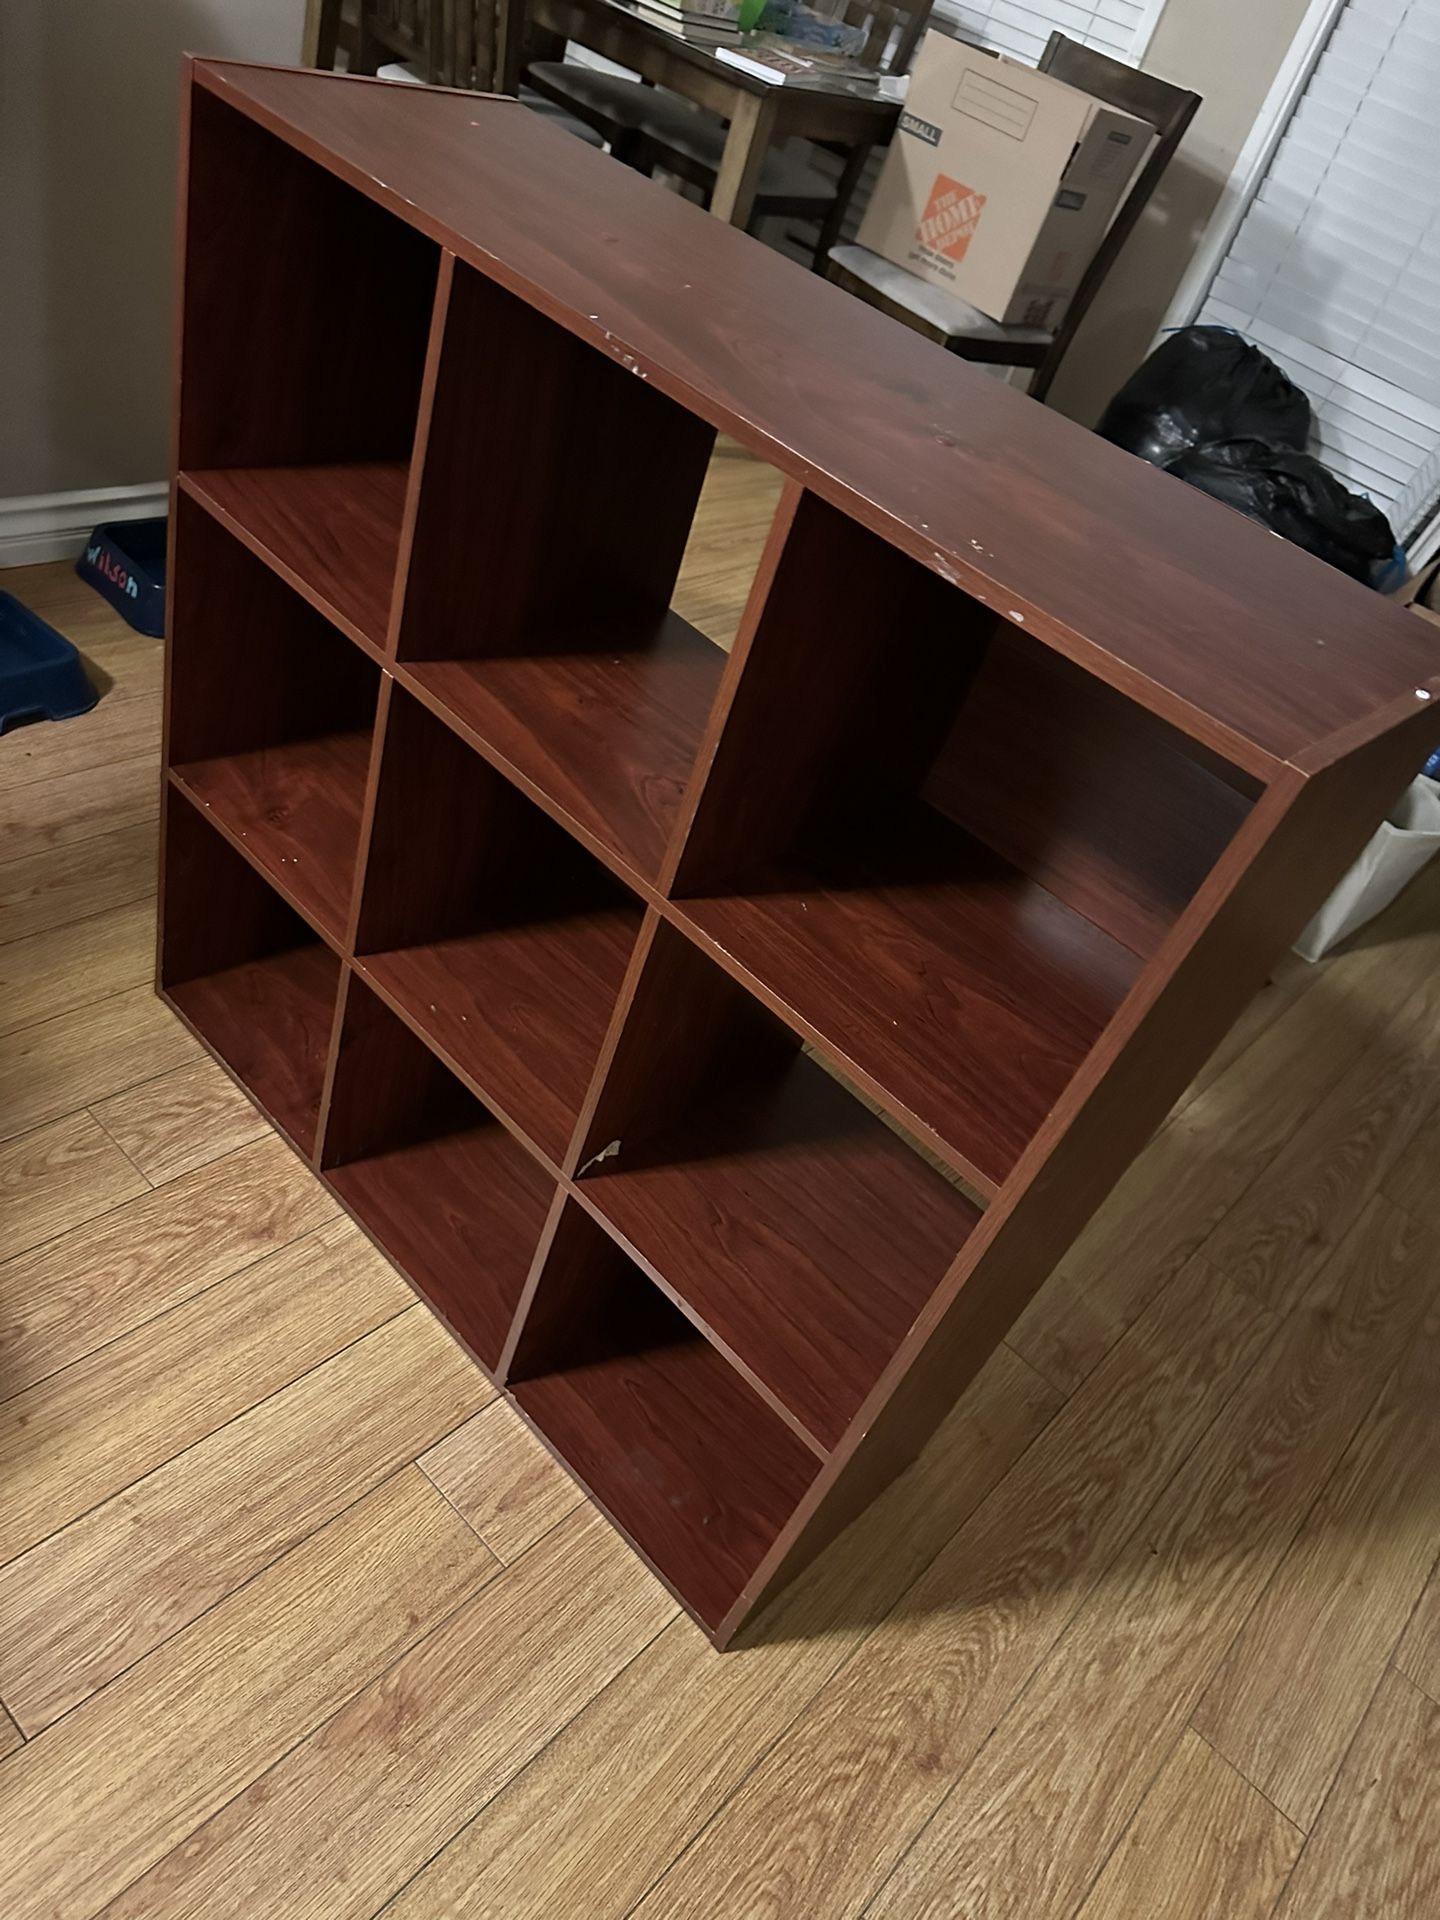 9 Cube Organizers Shelf